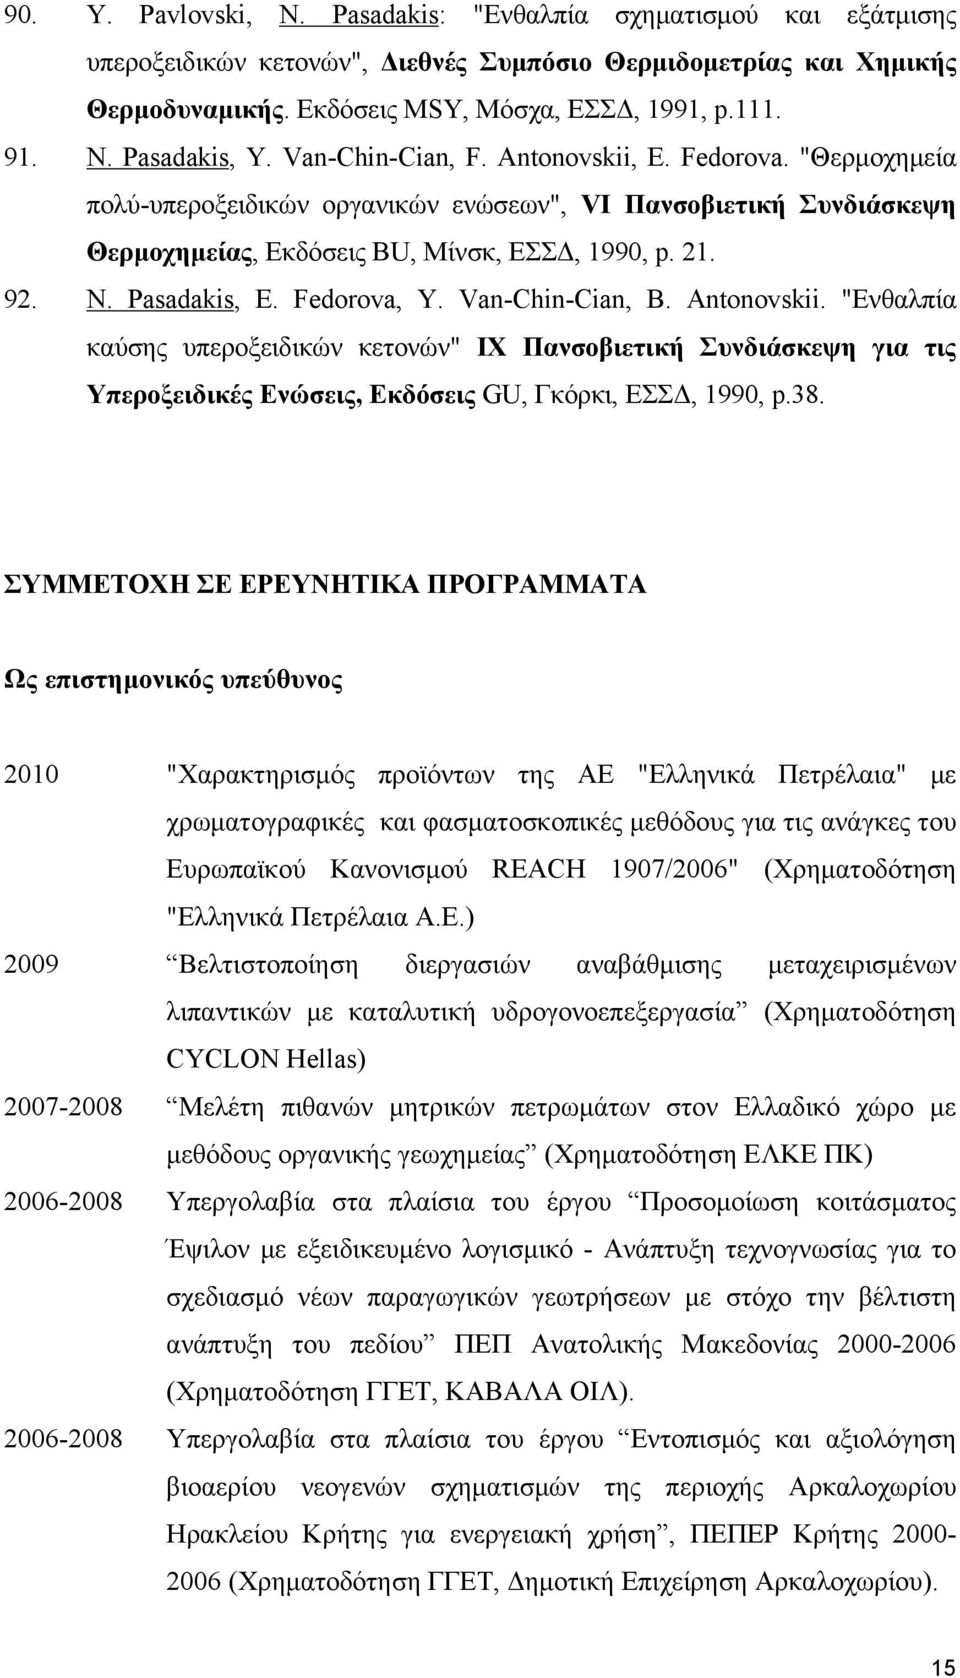 Pasadakis, E. Fedorοva, Y. Van-Chin-Cian, B. Antonovskii. "Ενθαλπία καύσης υπεροξειδικών κετονών" IX Πανσοβιετική Συνδιάσκεψη για τις Υπεροξειδικές Ενώσεις, Εκδόσεις GU, Γκόρκι, ΕΣΣΔ, 1990, p.38.